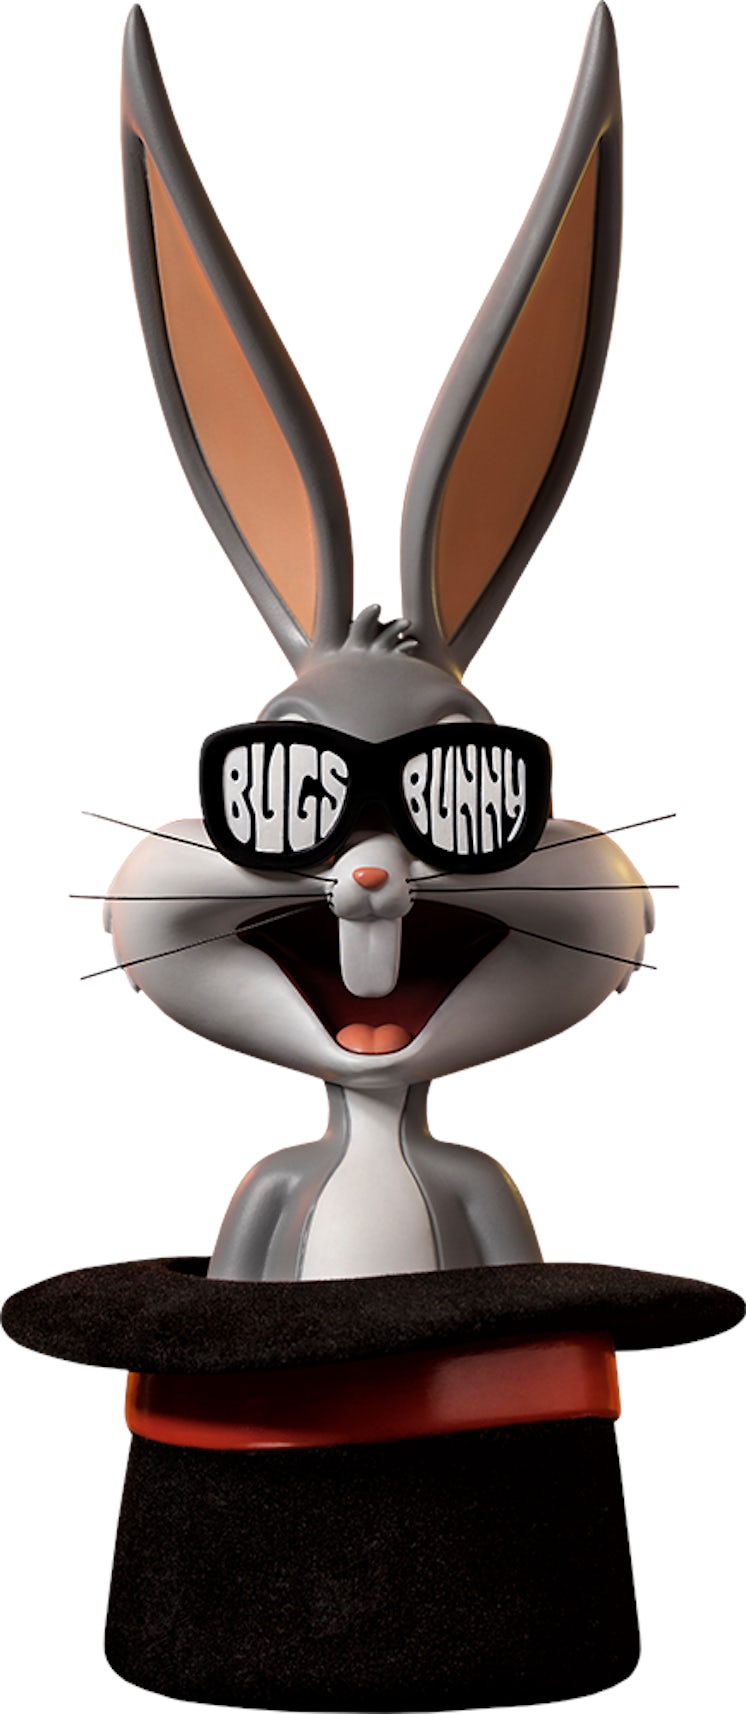 https://images.stockx.com/images/Soap-Studio-Bugs-Bunny-Top-Hat-Bust-Looney-Tunes-Vinyl-Figure.jpg?fit=fill&bg=FFFFFF&w=1200&h=857&fm=jpg&auto=compress&dpr=2&trim=color&updated_at=1648144950&q=60